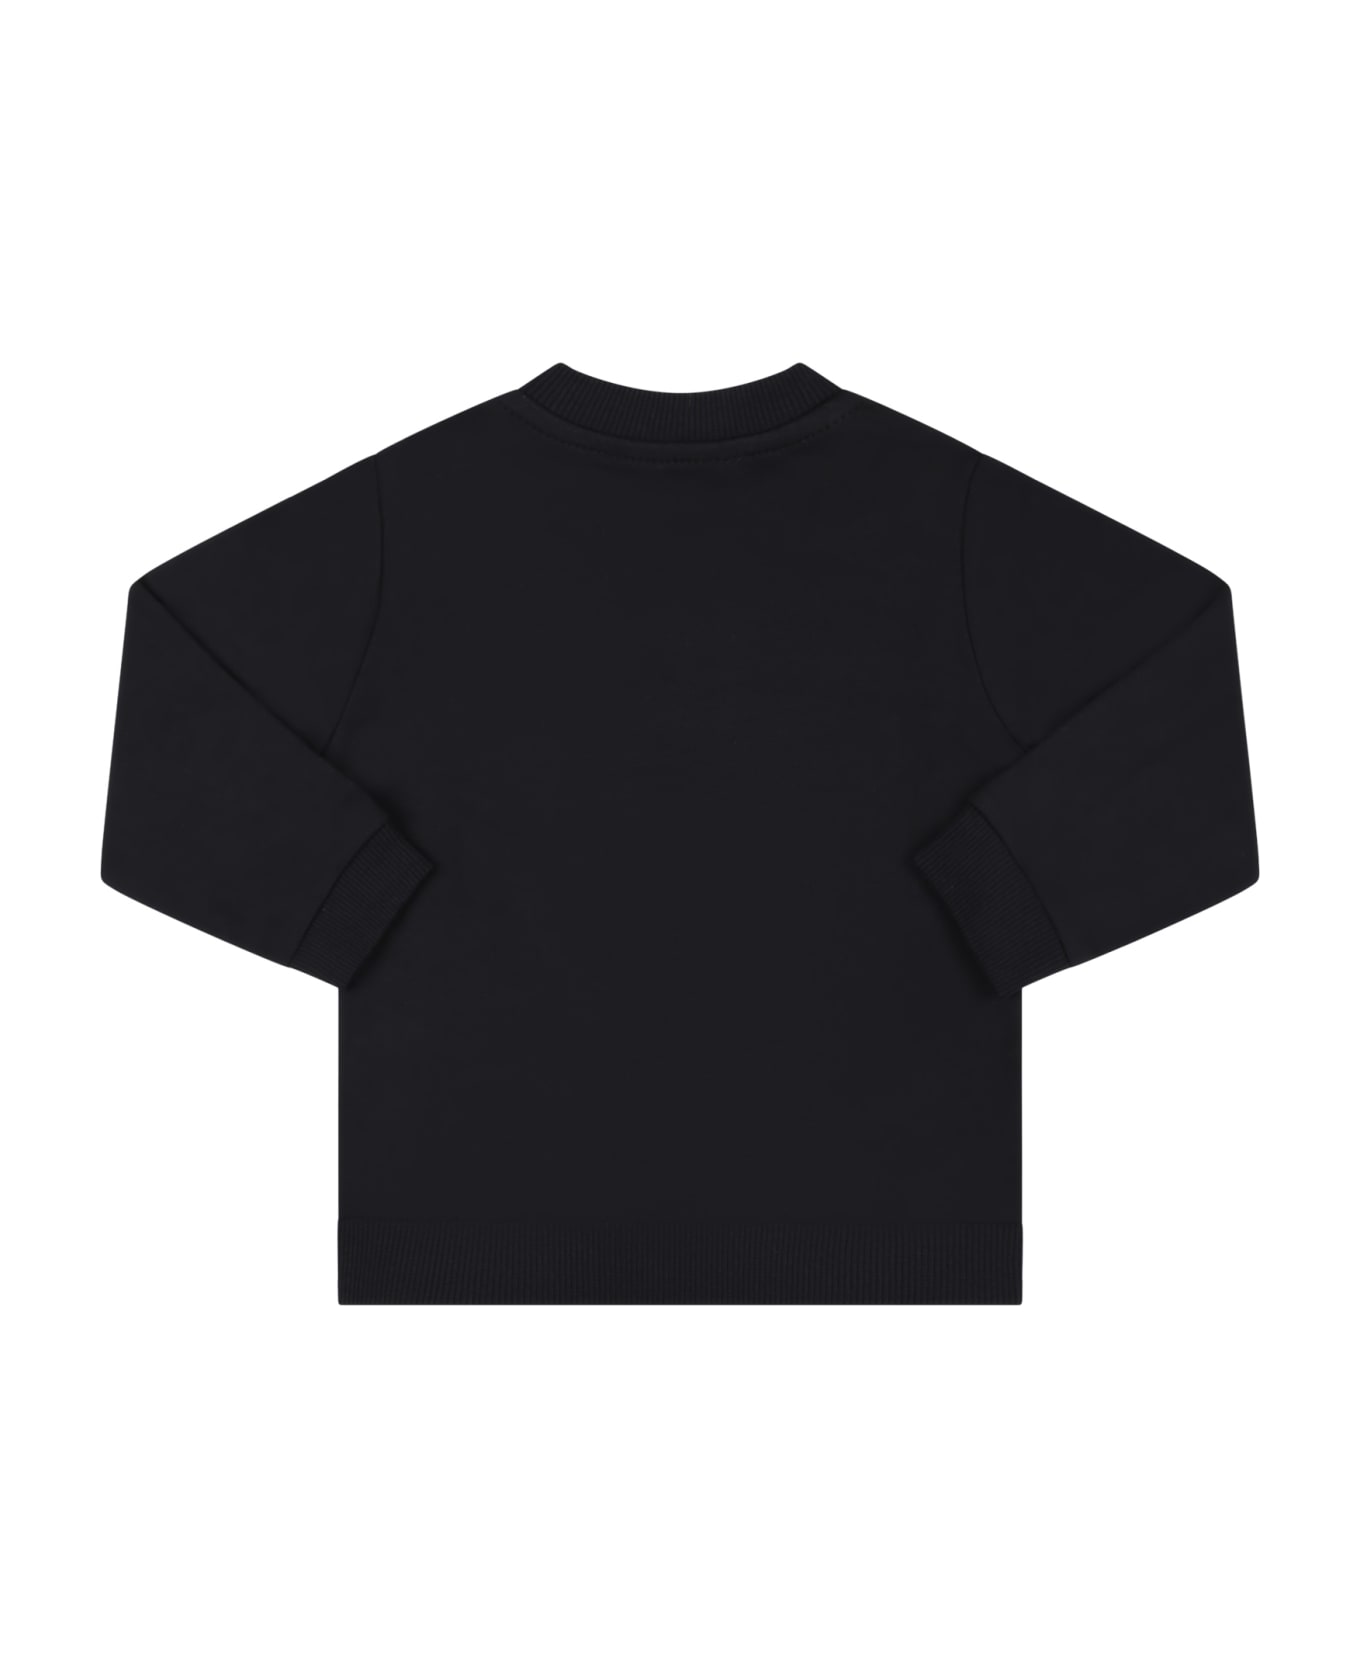 Moschino Black Sweatshirt For Babykids With Teddy Bear And White Logo - Black